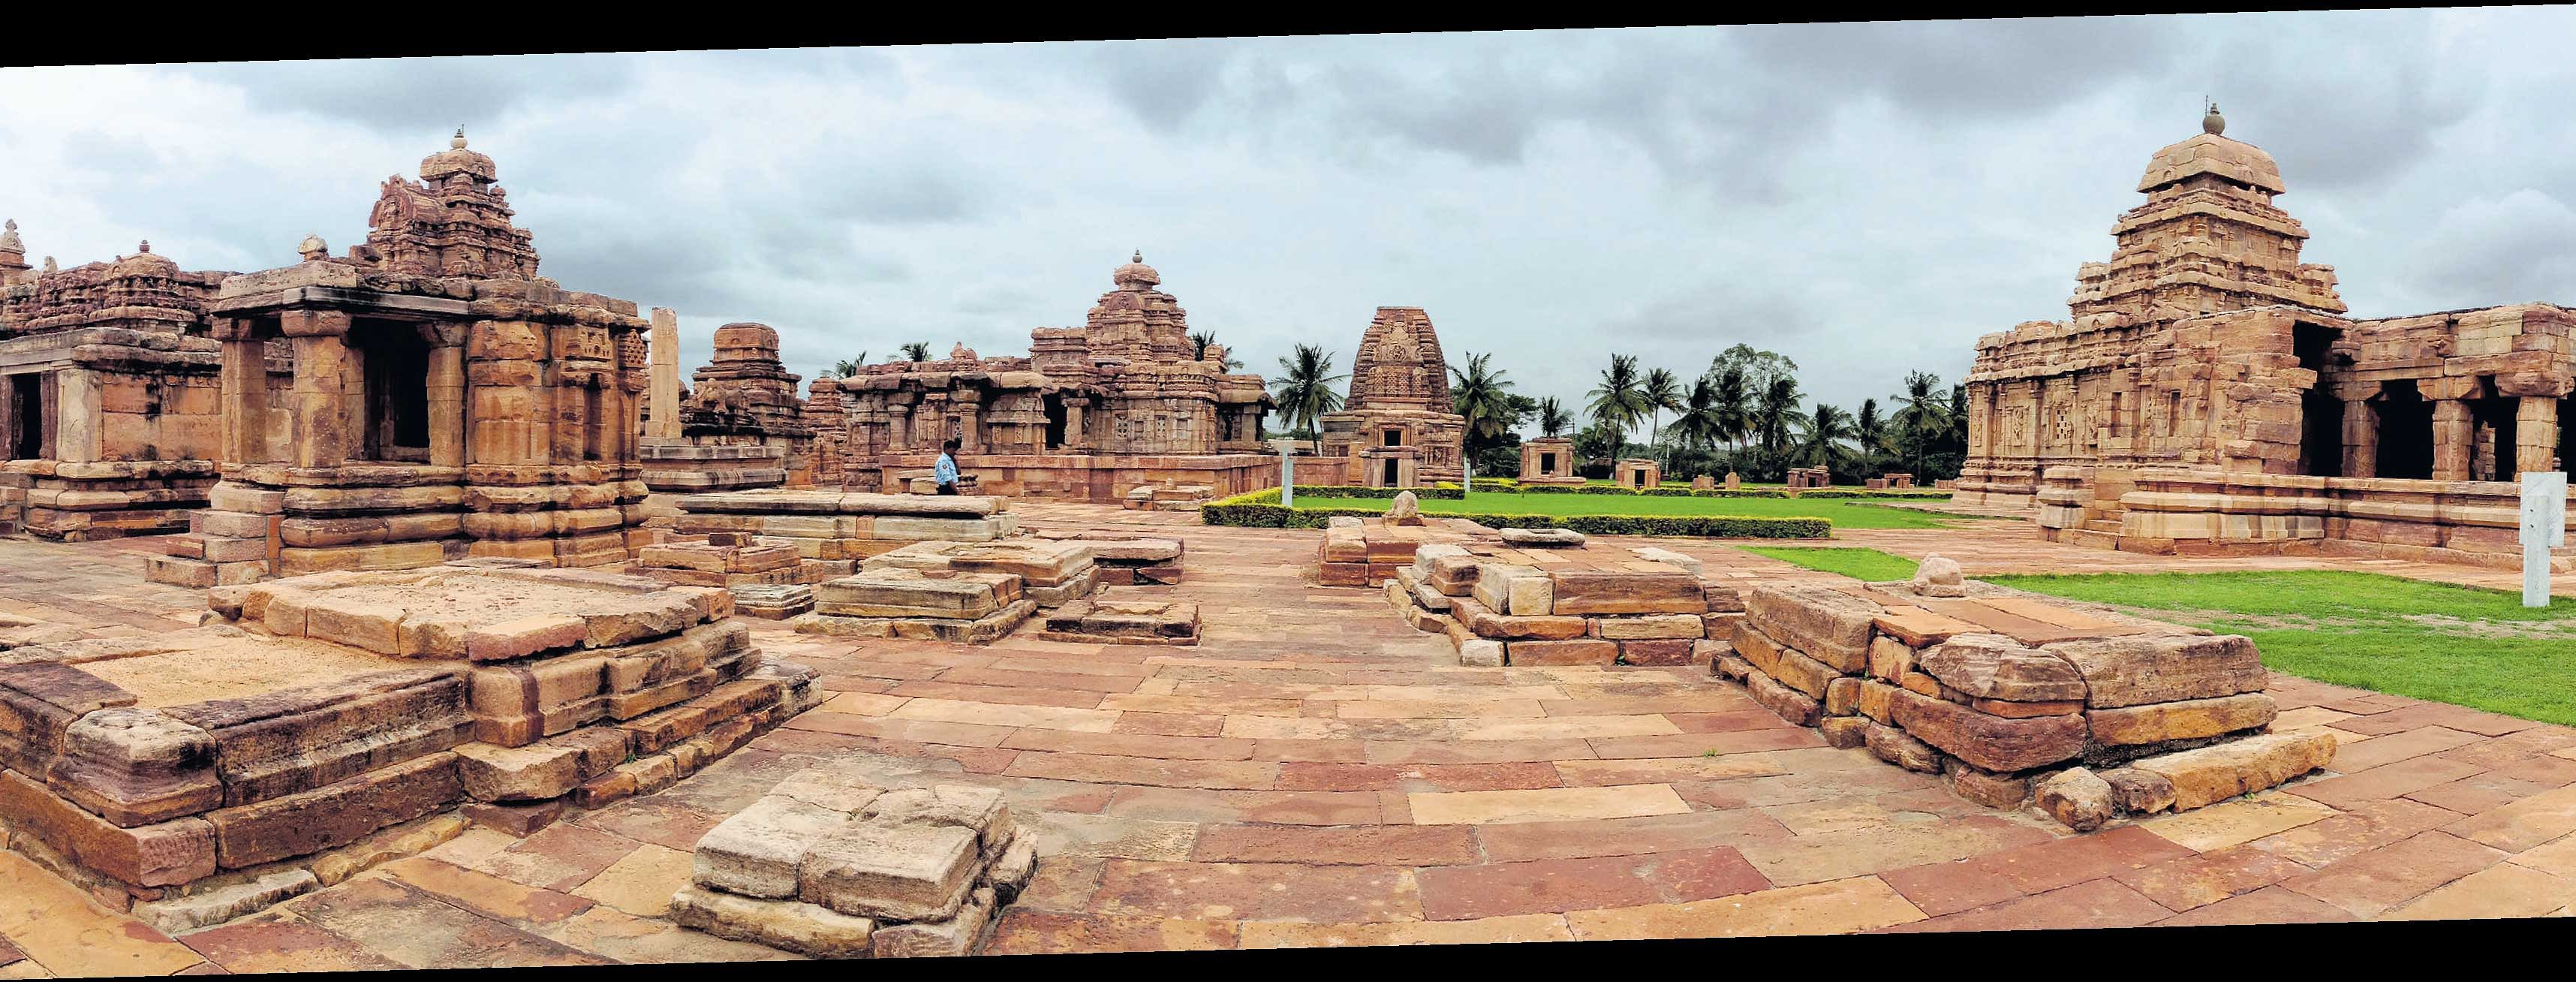 The temples at Pattadakallu